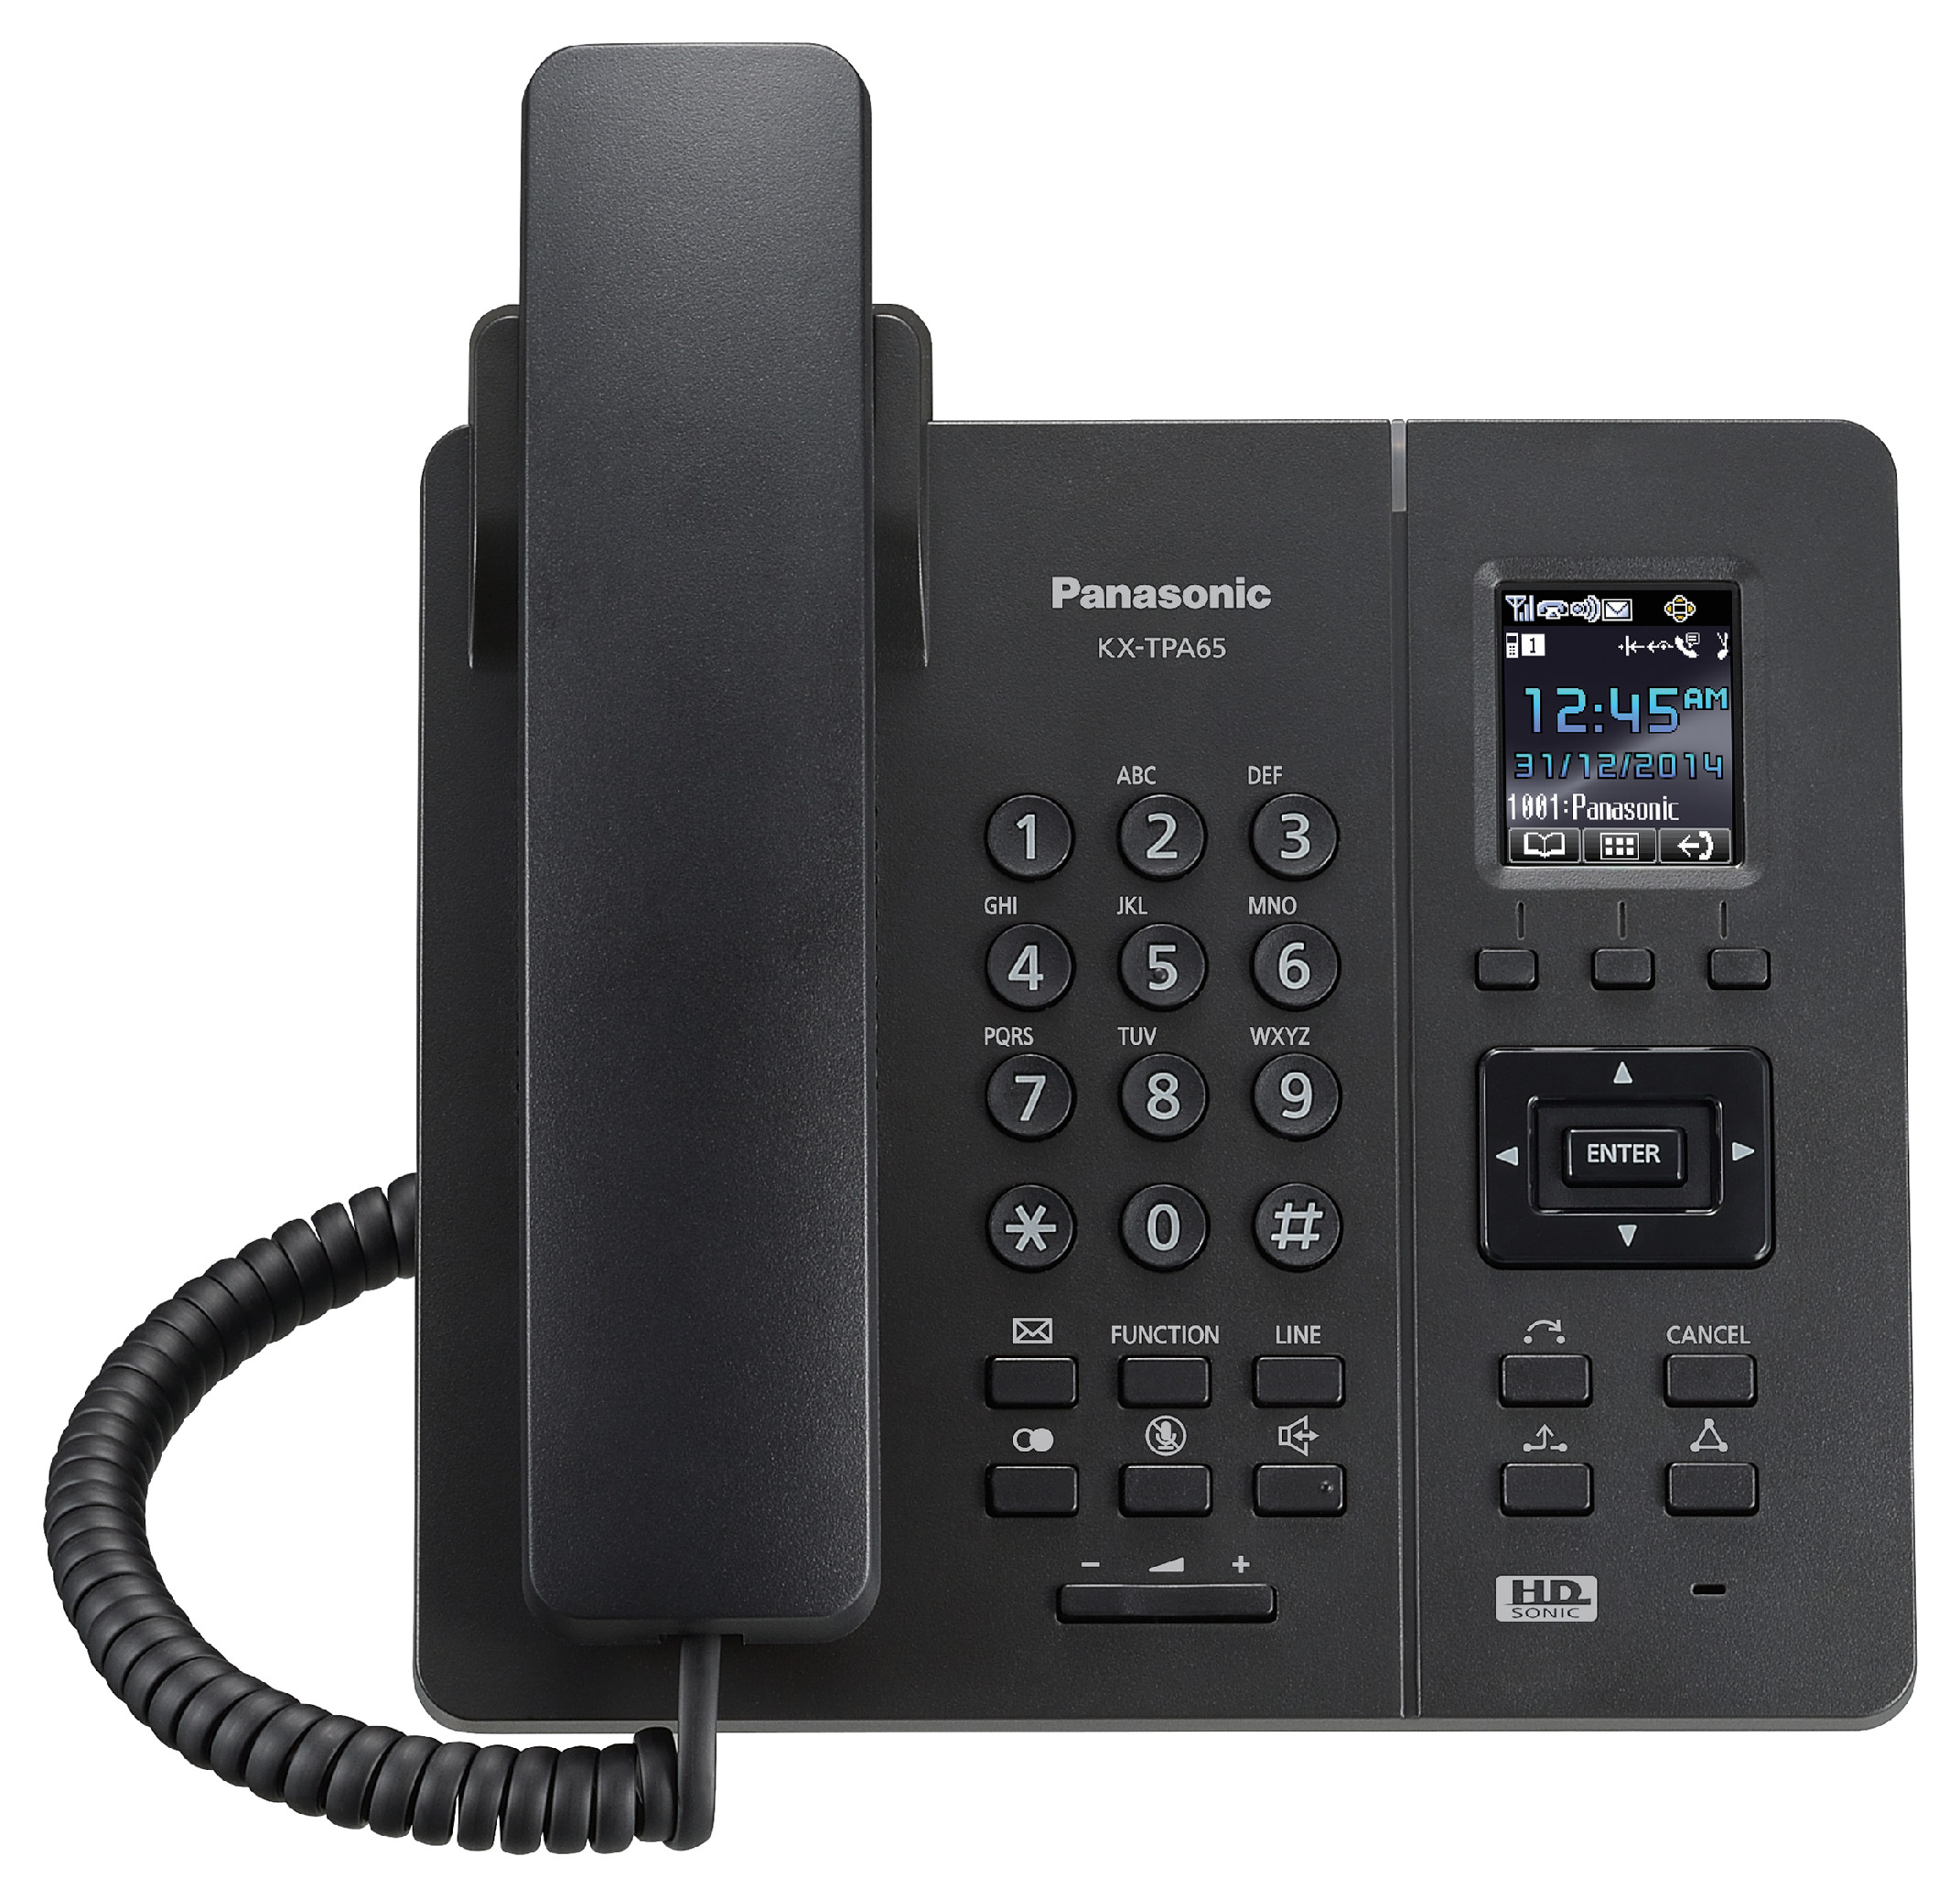 Русский стационарный телефон. Panasonic KX-tpa65ru. KX-tpa65. VOIP-телефон Panasonic KX-tgp600. Панасоник tpa65.